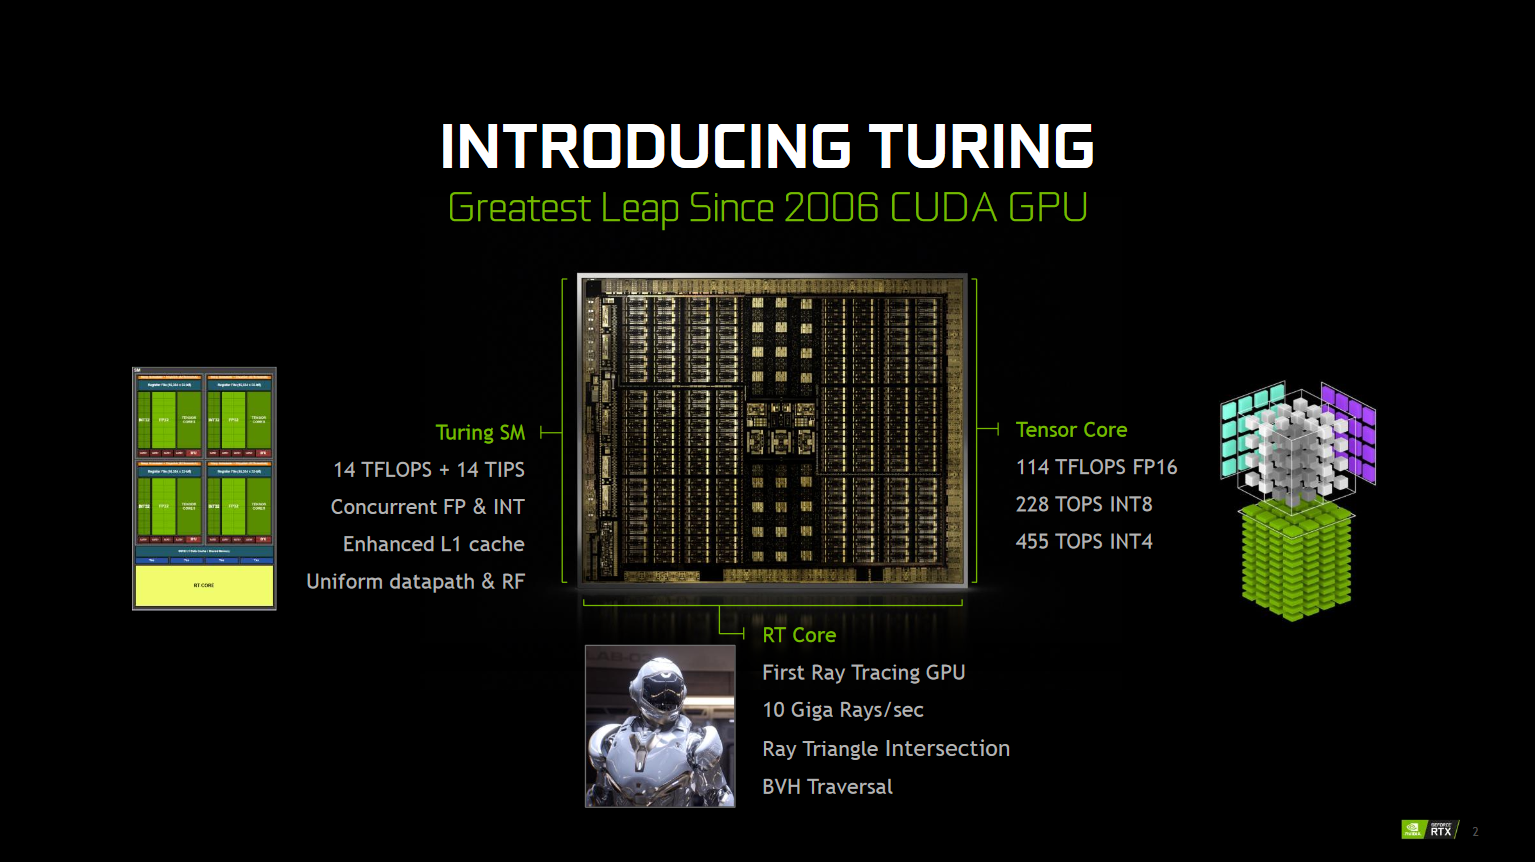 Turing SM